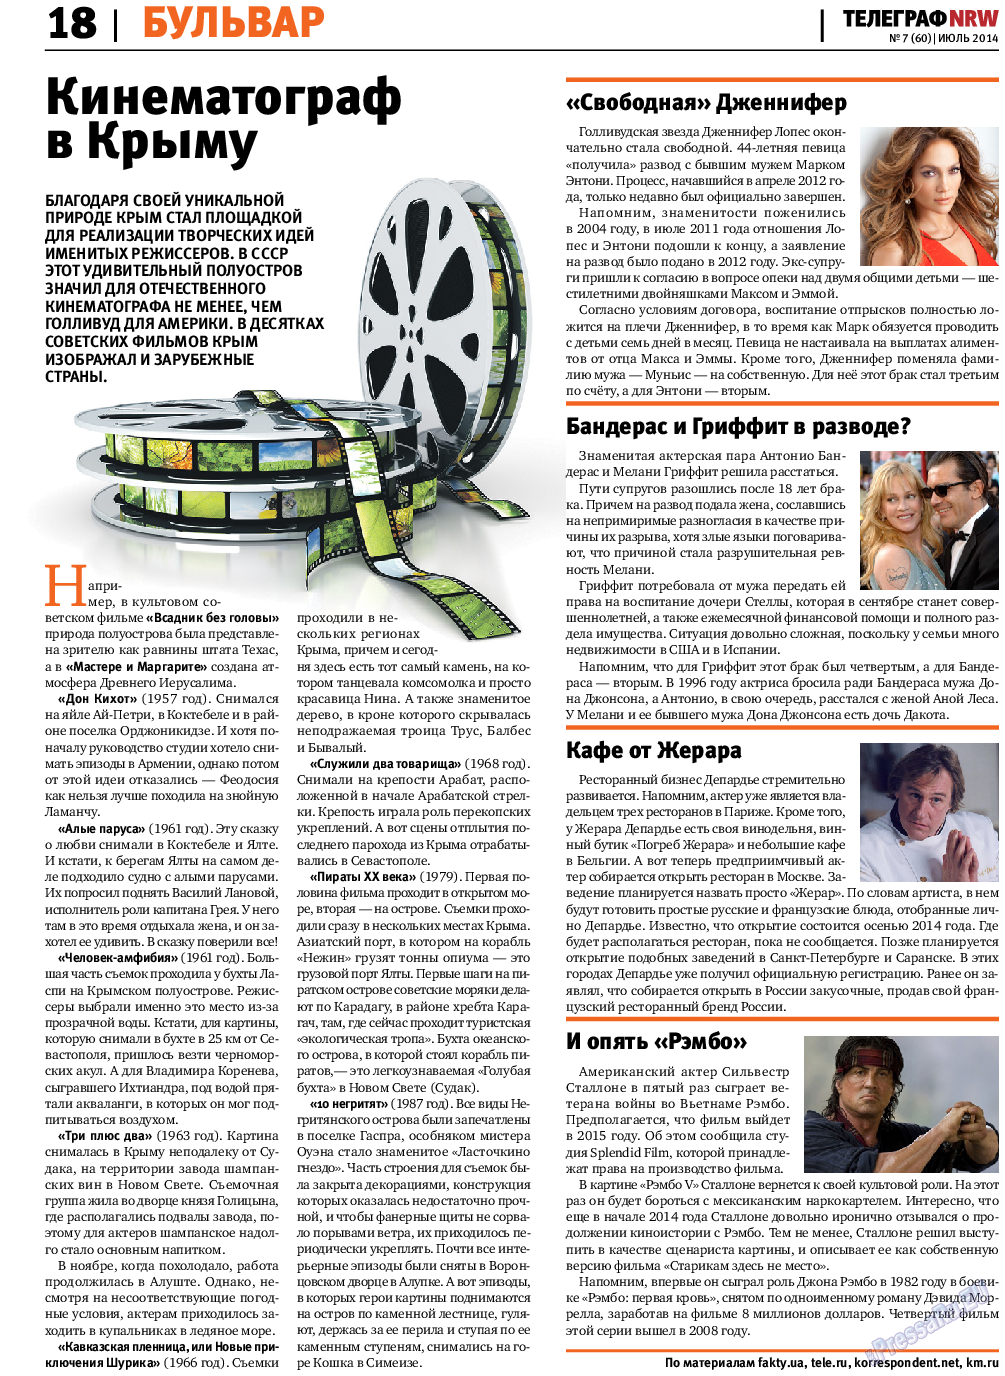 Телеграф NRW, газета. 2014 №7 стр.18